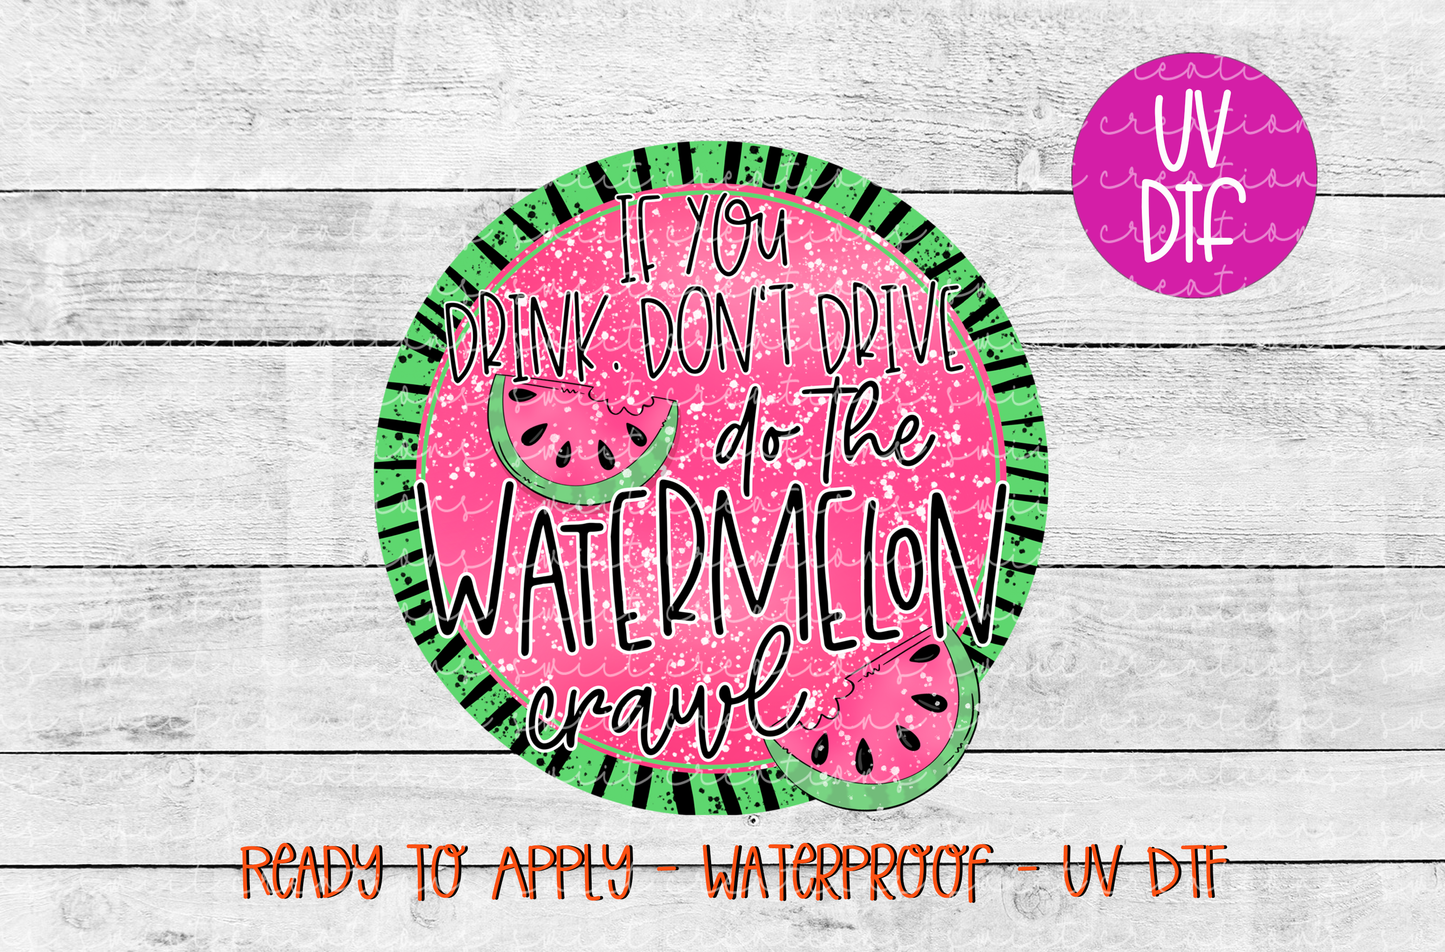 If You Drink Don't Drive Watermelon Crawl UV DTF - UV628 (4x4)